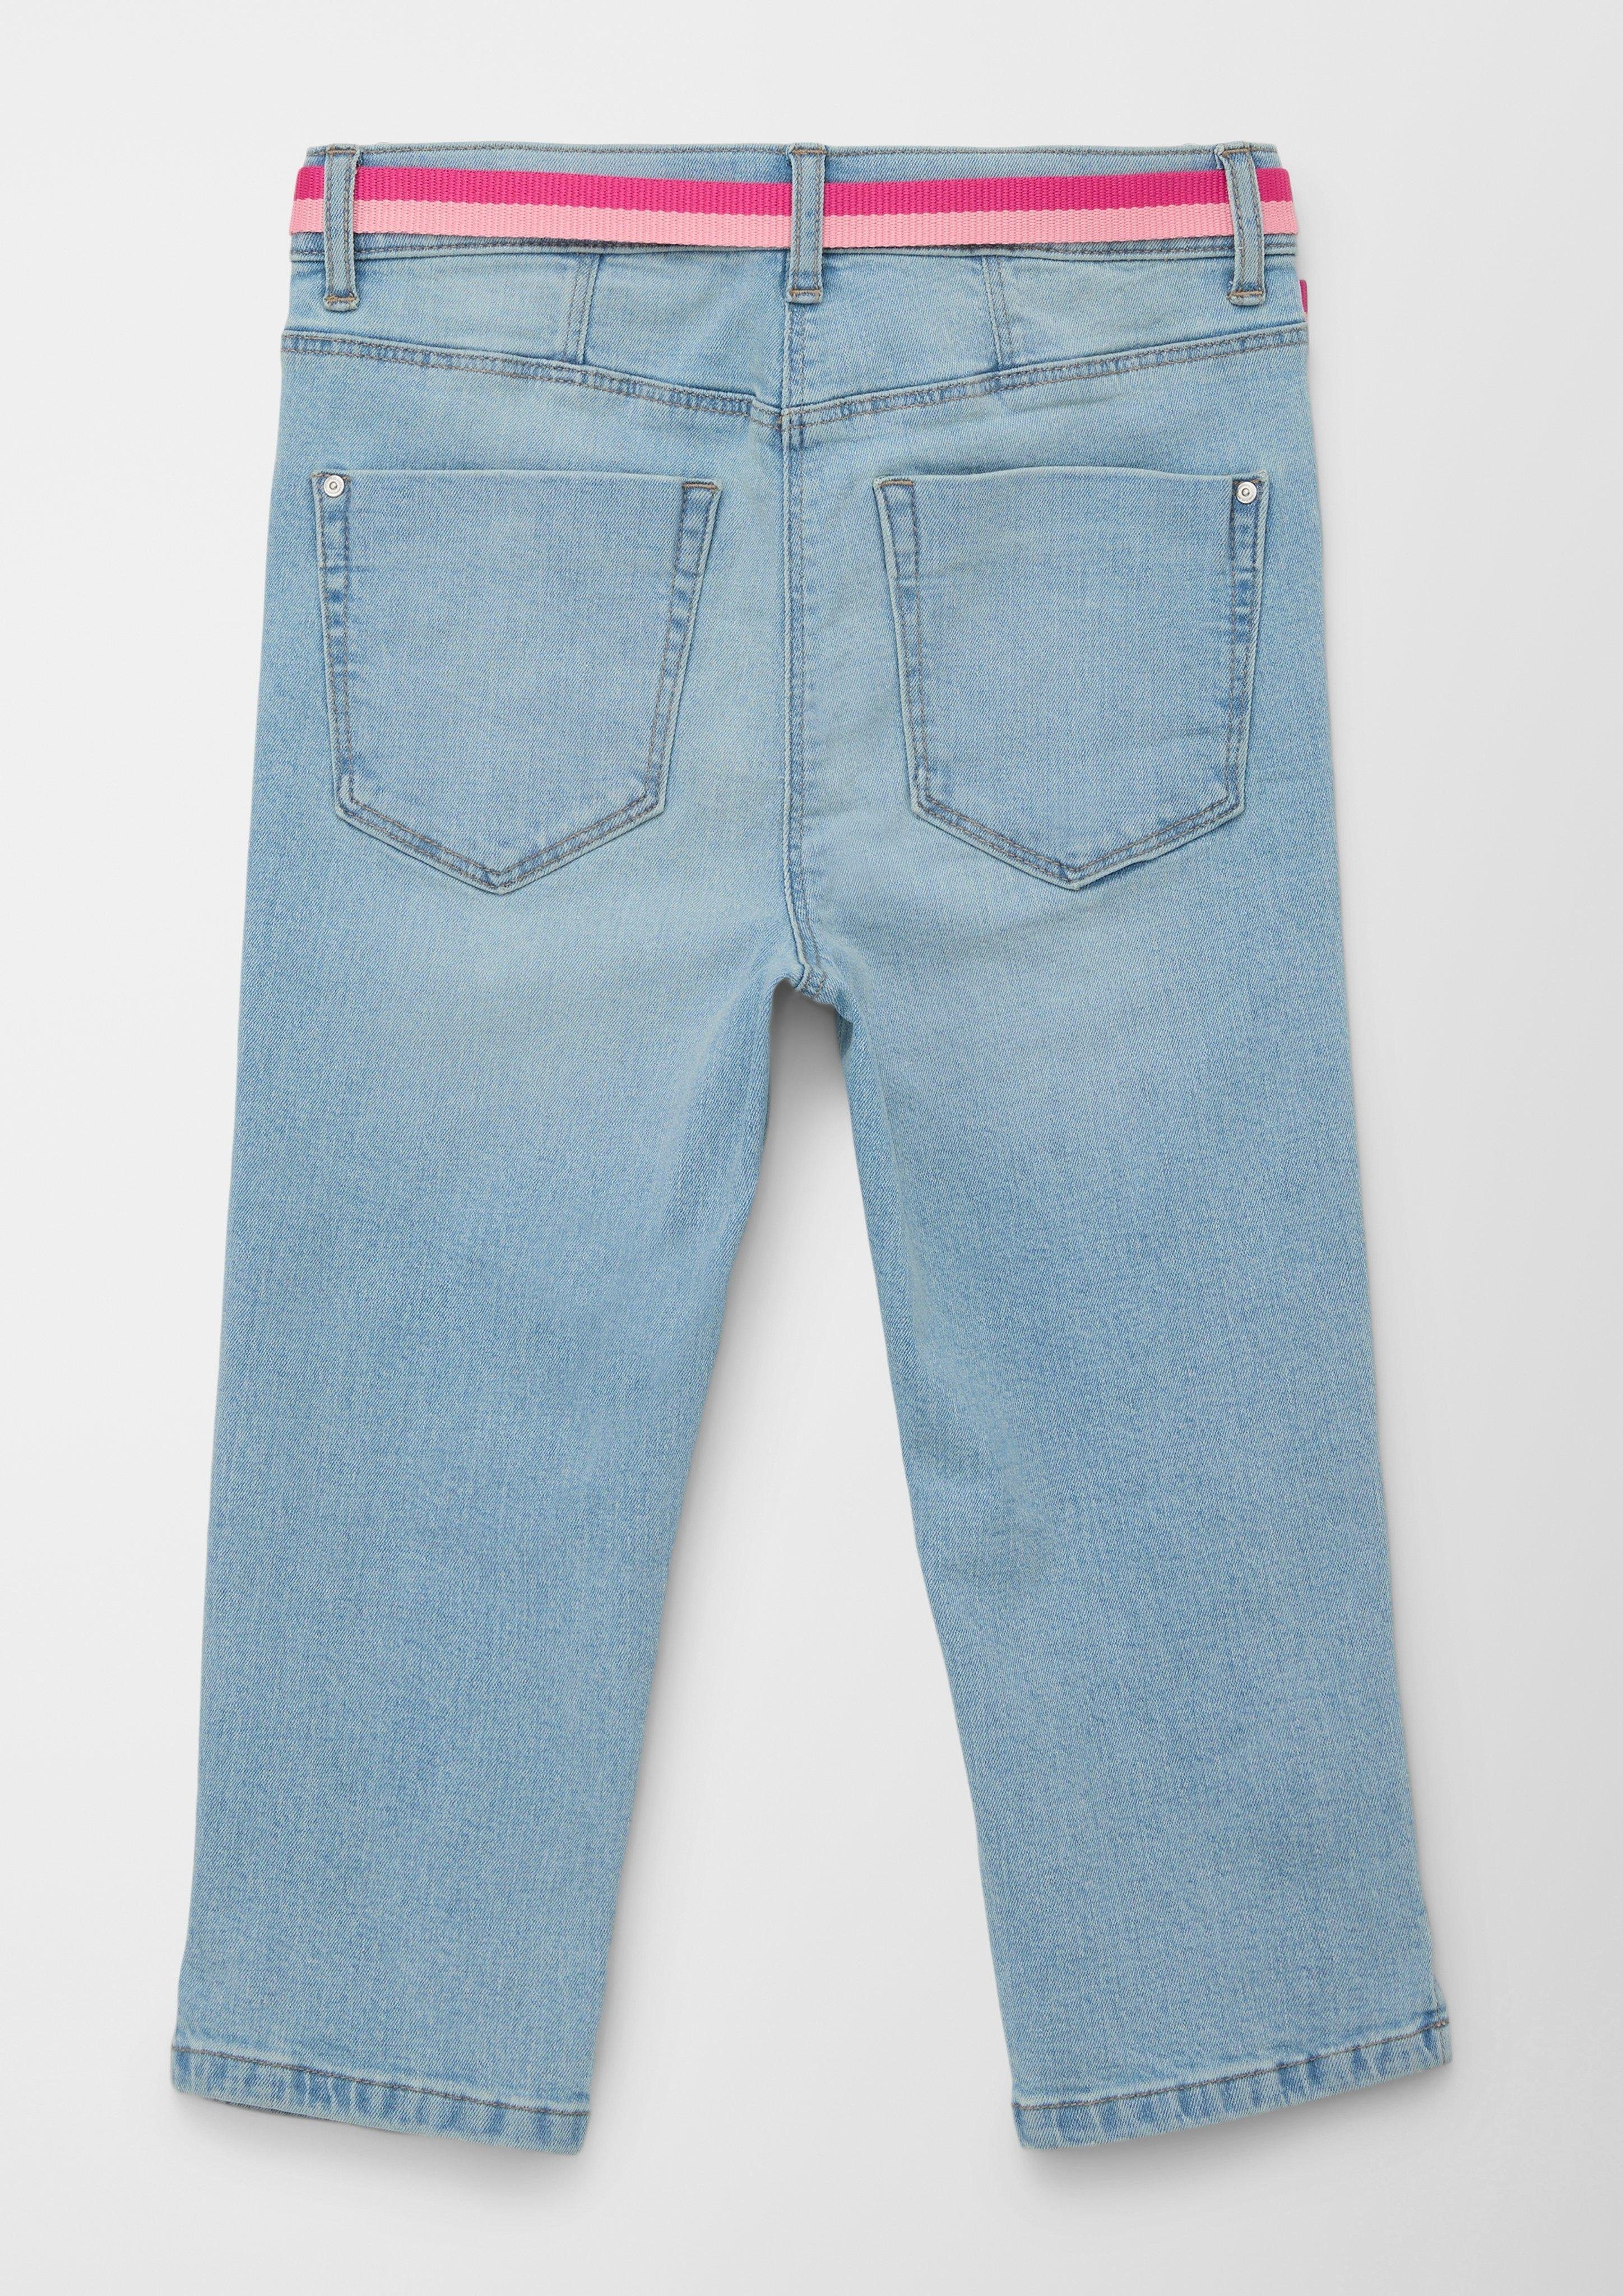 Rise Skinny Waschung / Suri Leg / High Capri-Jeans s.Oliver Skinny Skinny 5-Pocket-Jeans / Fit